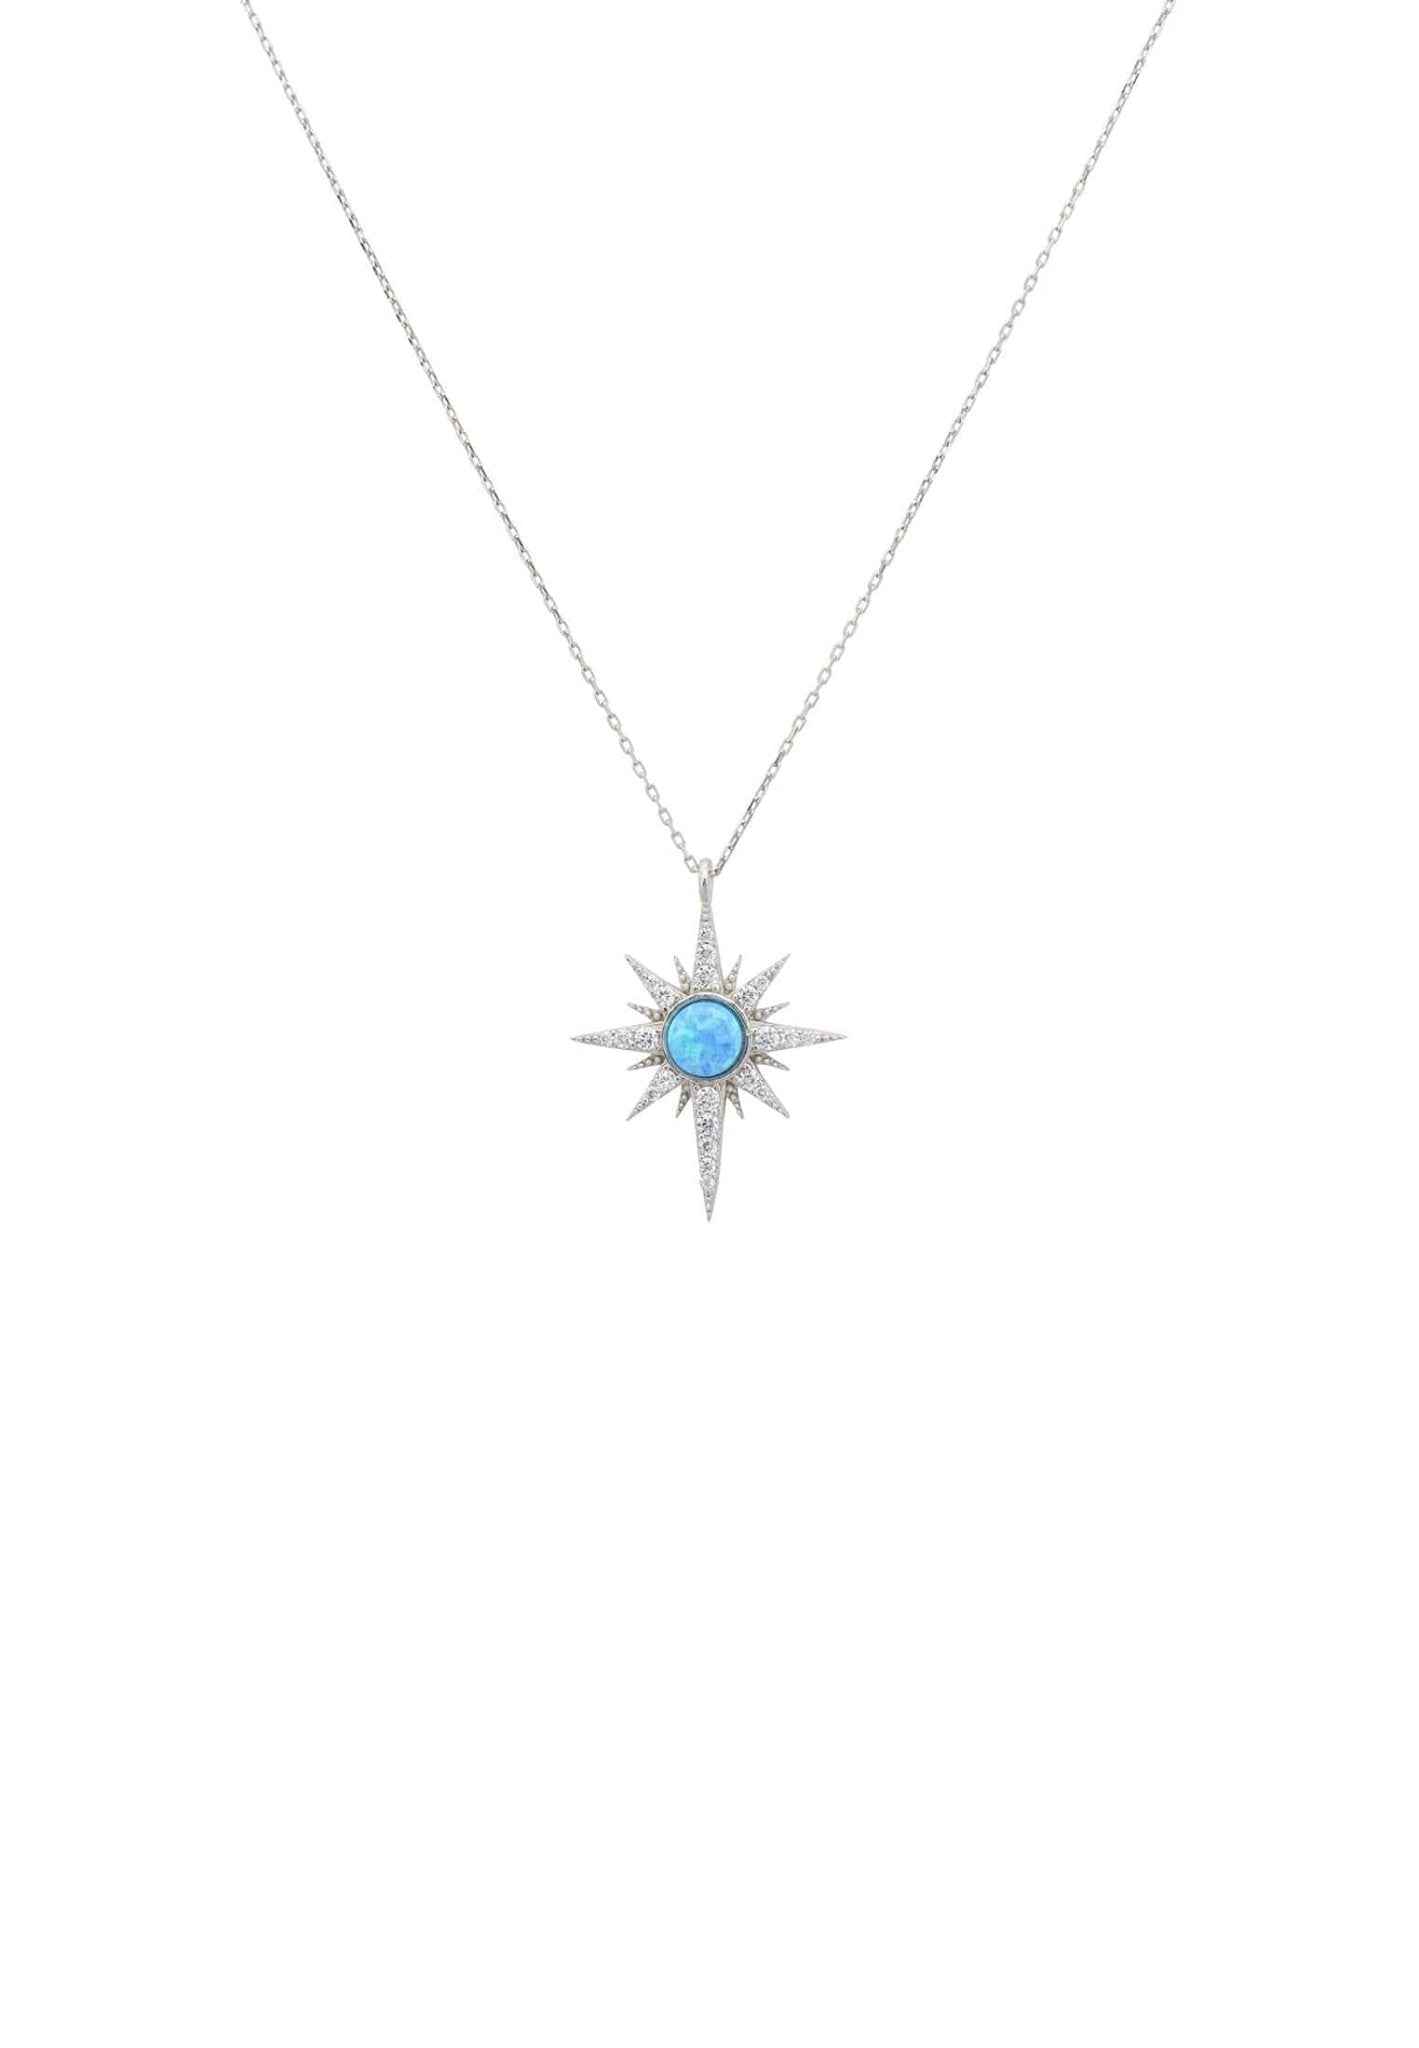 Apollo Opalite Blue Sunburst Necklace Silver - LATELITA Necklaces